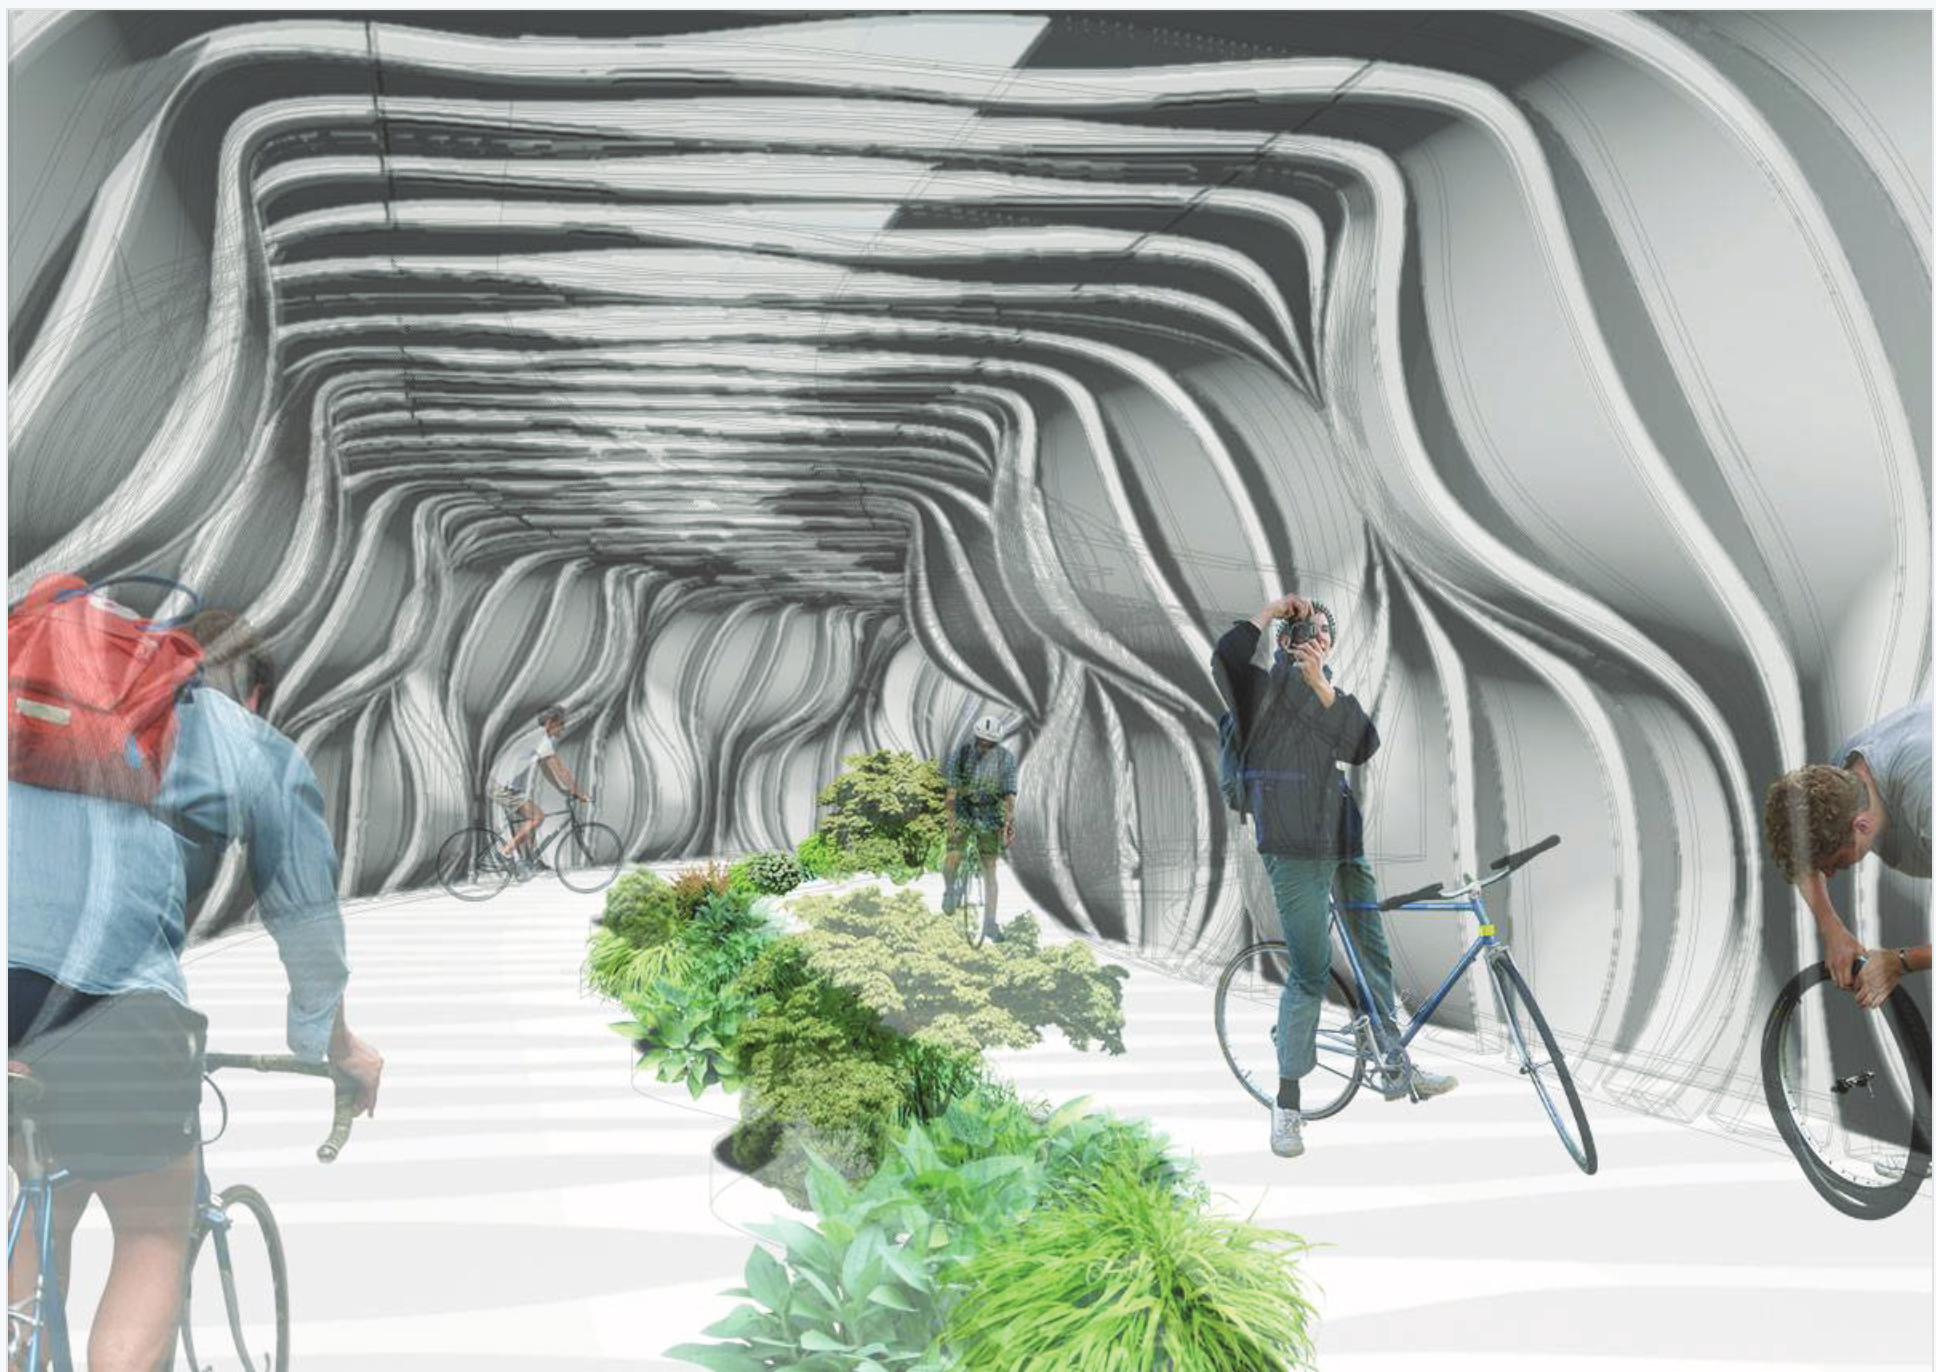 rendering of underground bicycle highway design